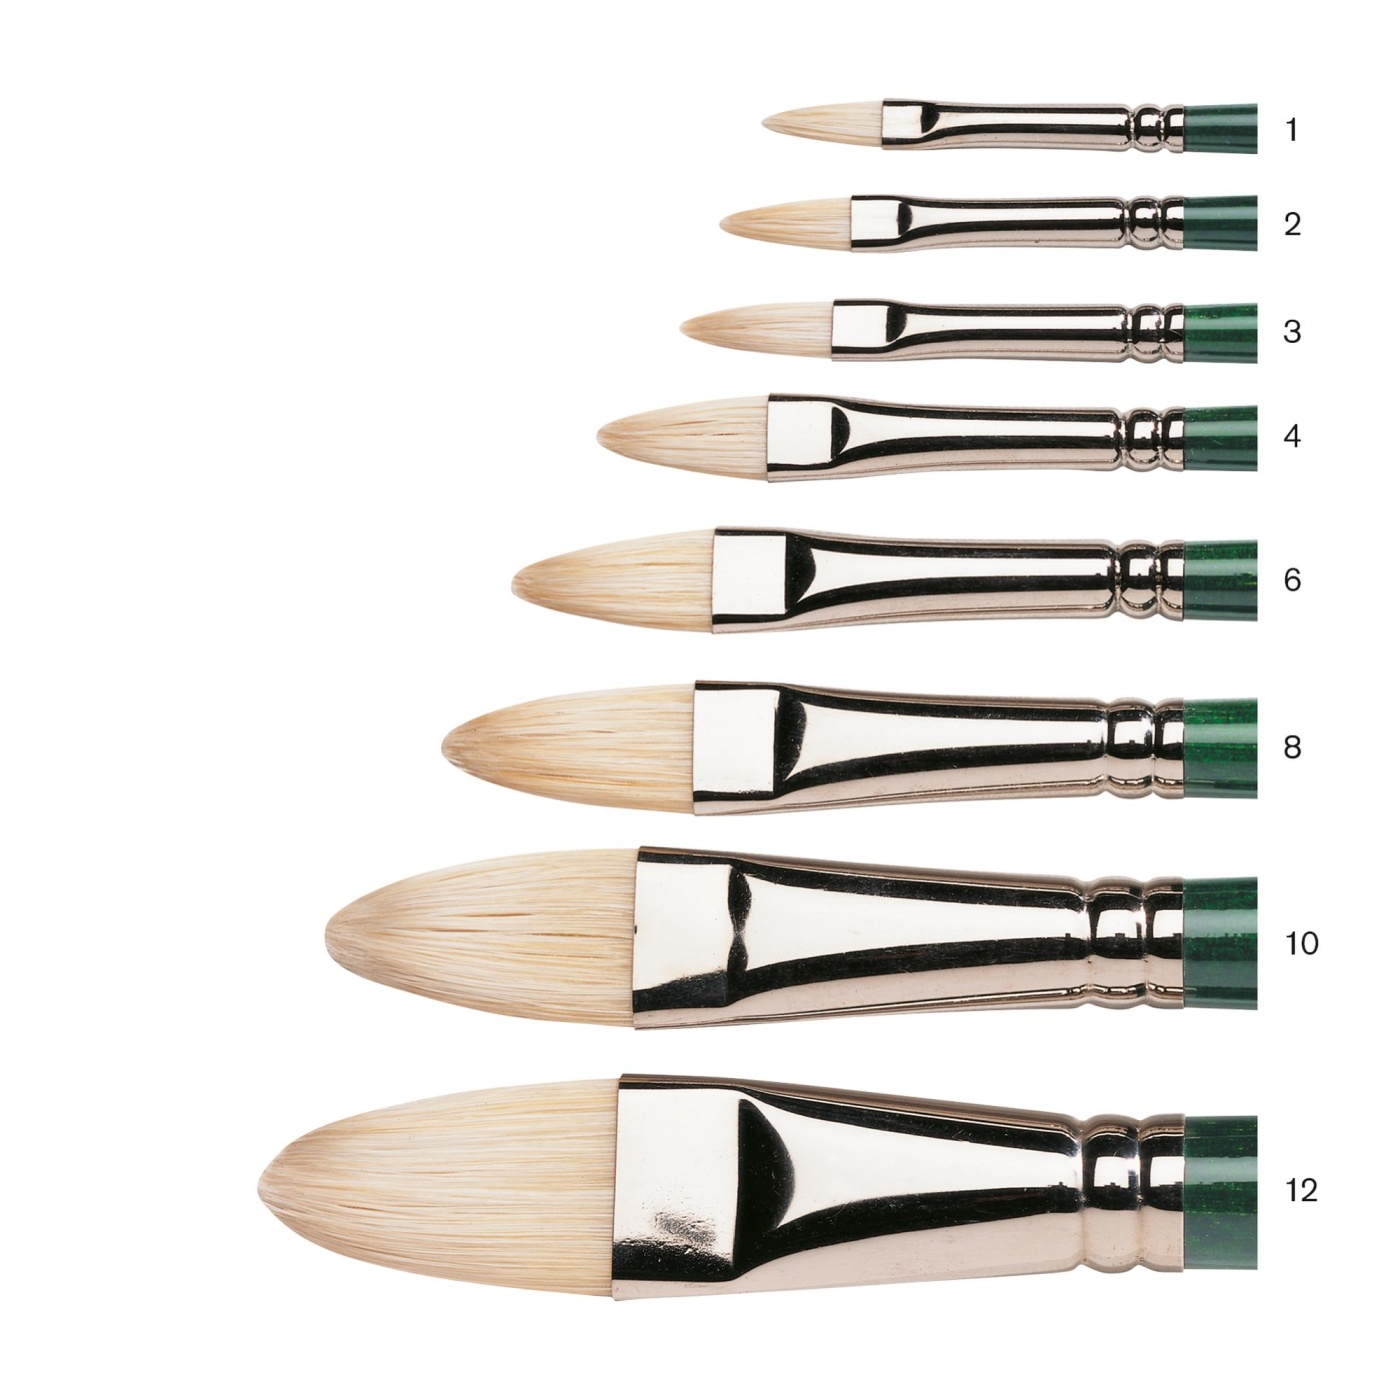 Winton Hog Brush Filbert 4 in the group Art Supplies / Brushes / Natural Hair Brushes at Pen Store (107657)